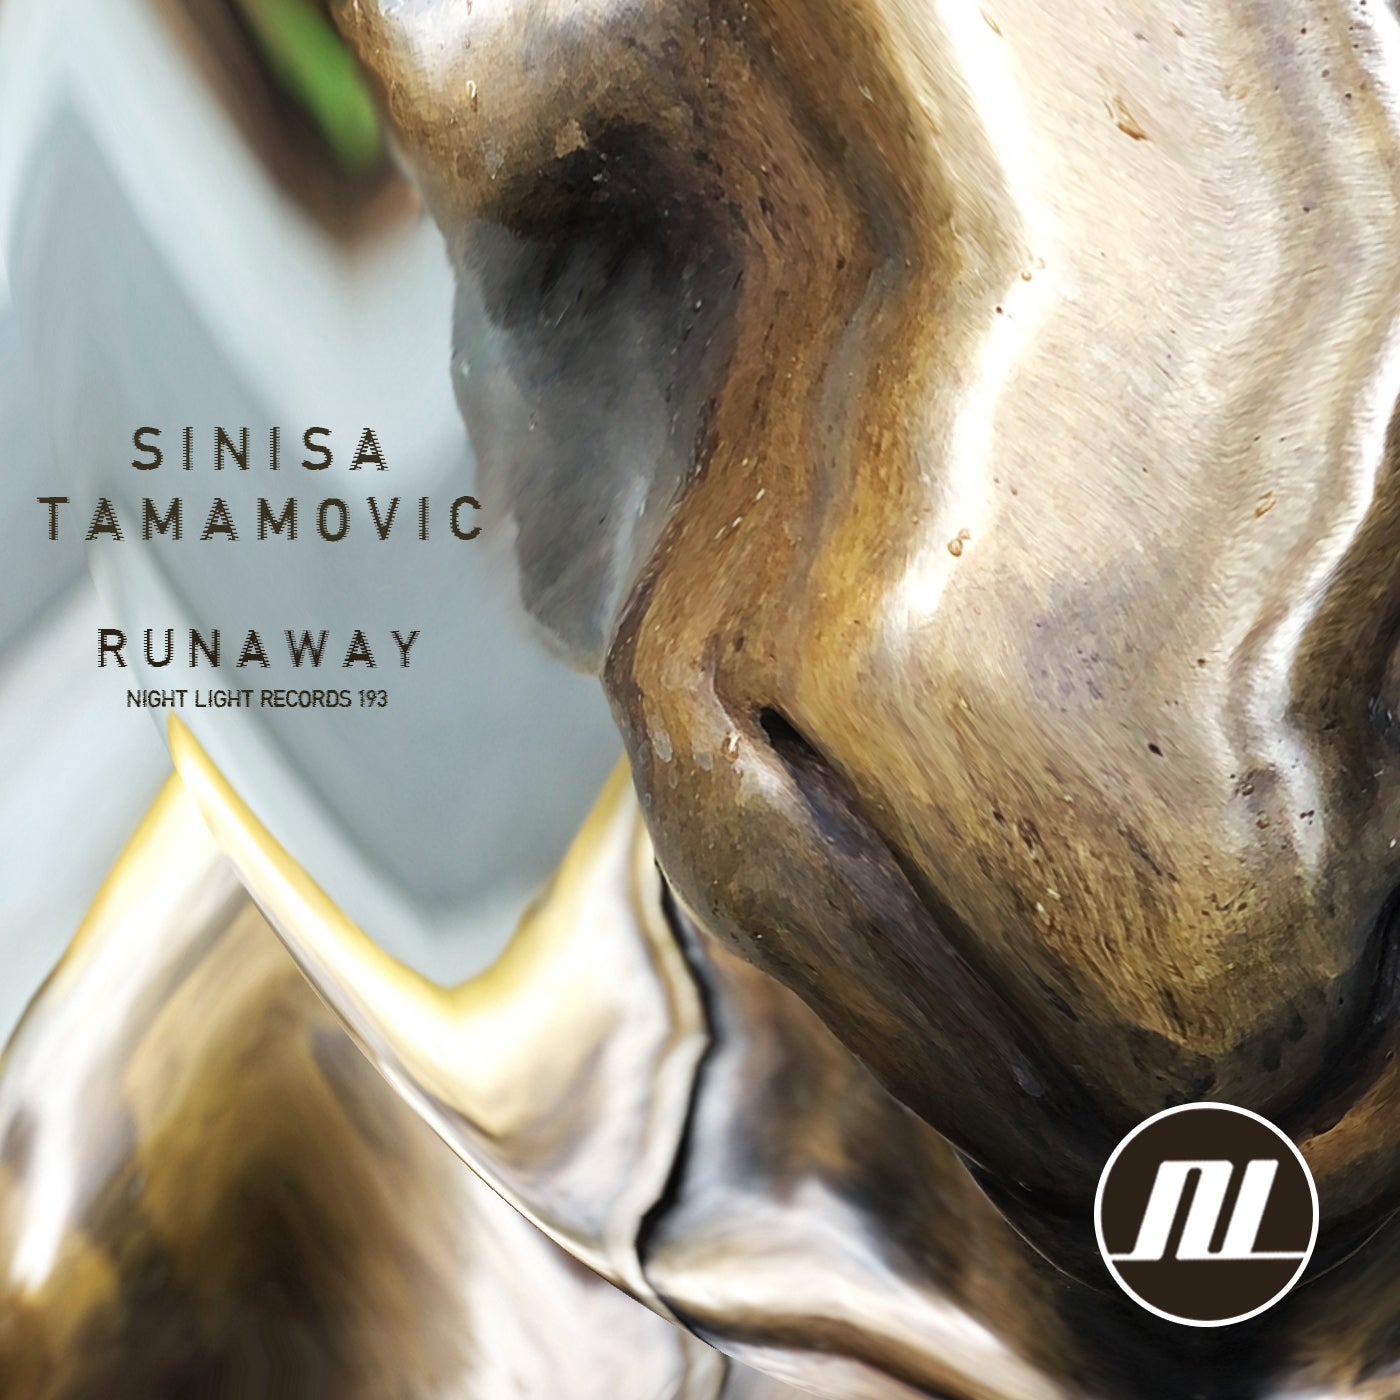 Sinisa Tamamovic - Runaway EP [NLD193]